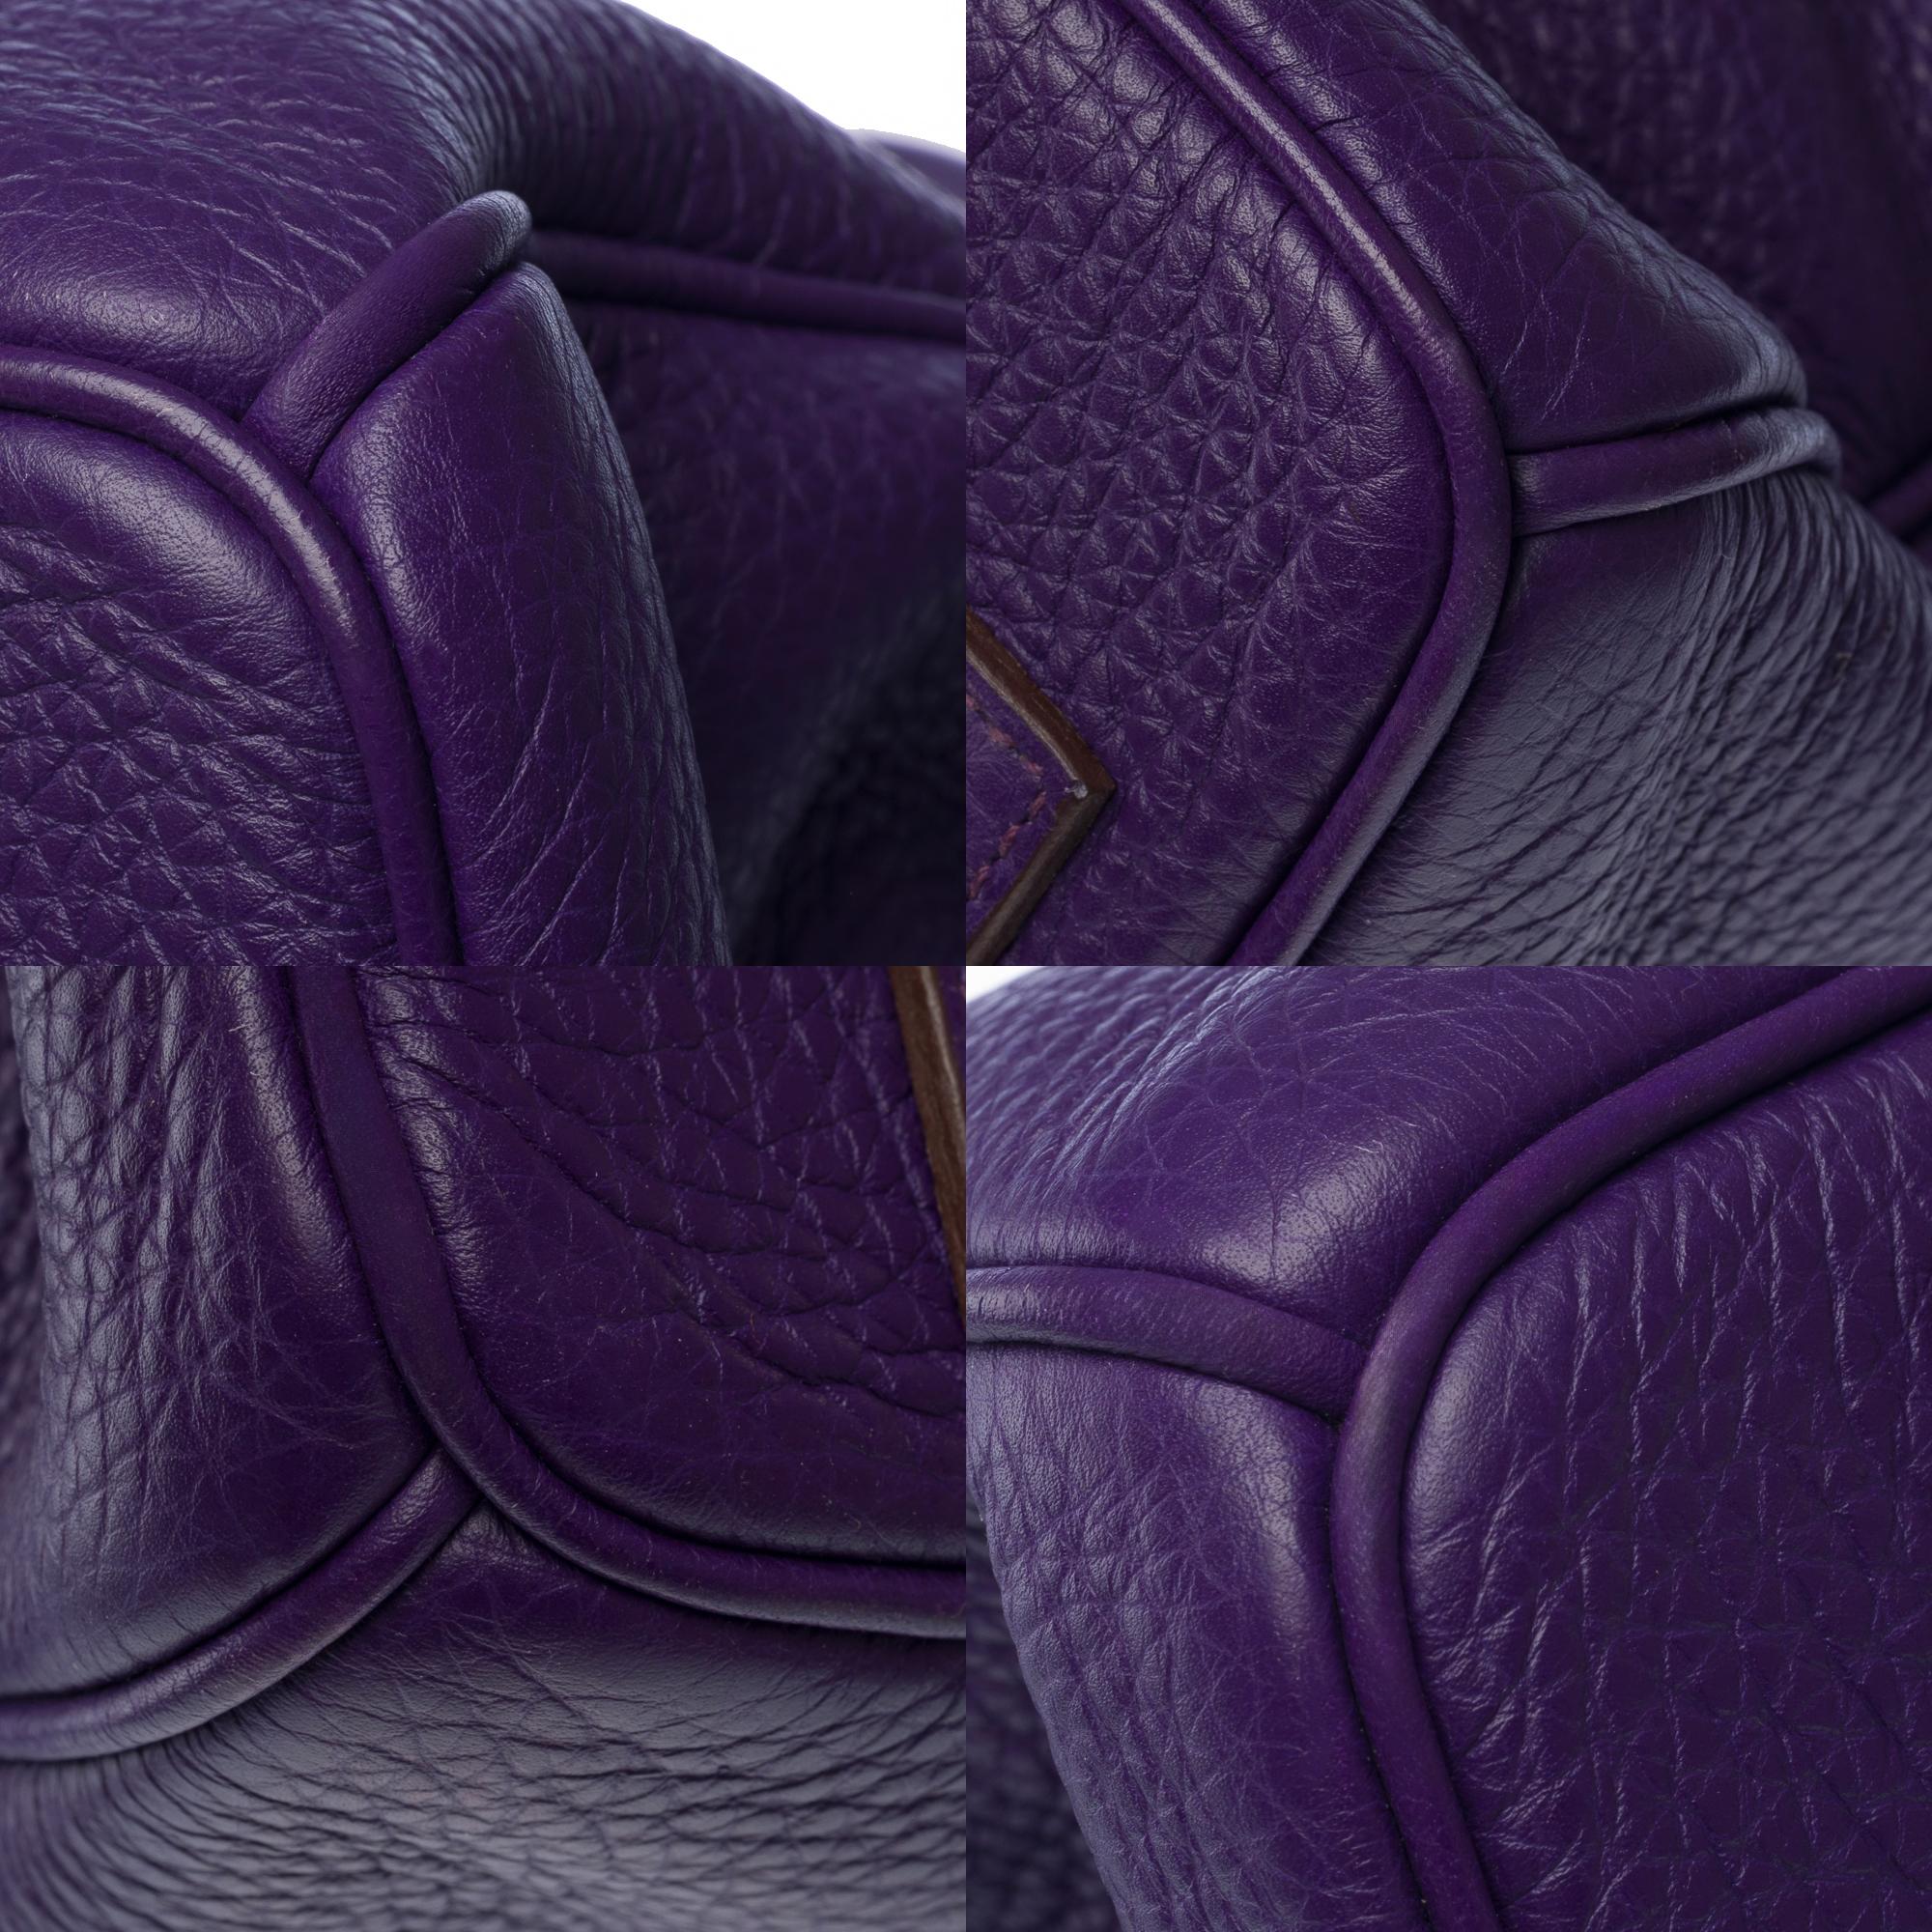 Classy & Rare Hermes Birkin 40 handbag in Iris Purple Togo leather, SHW 7